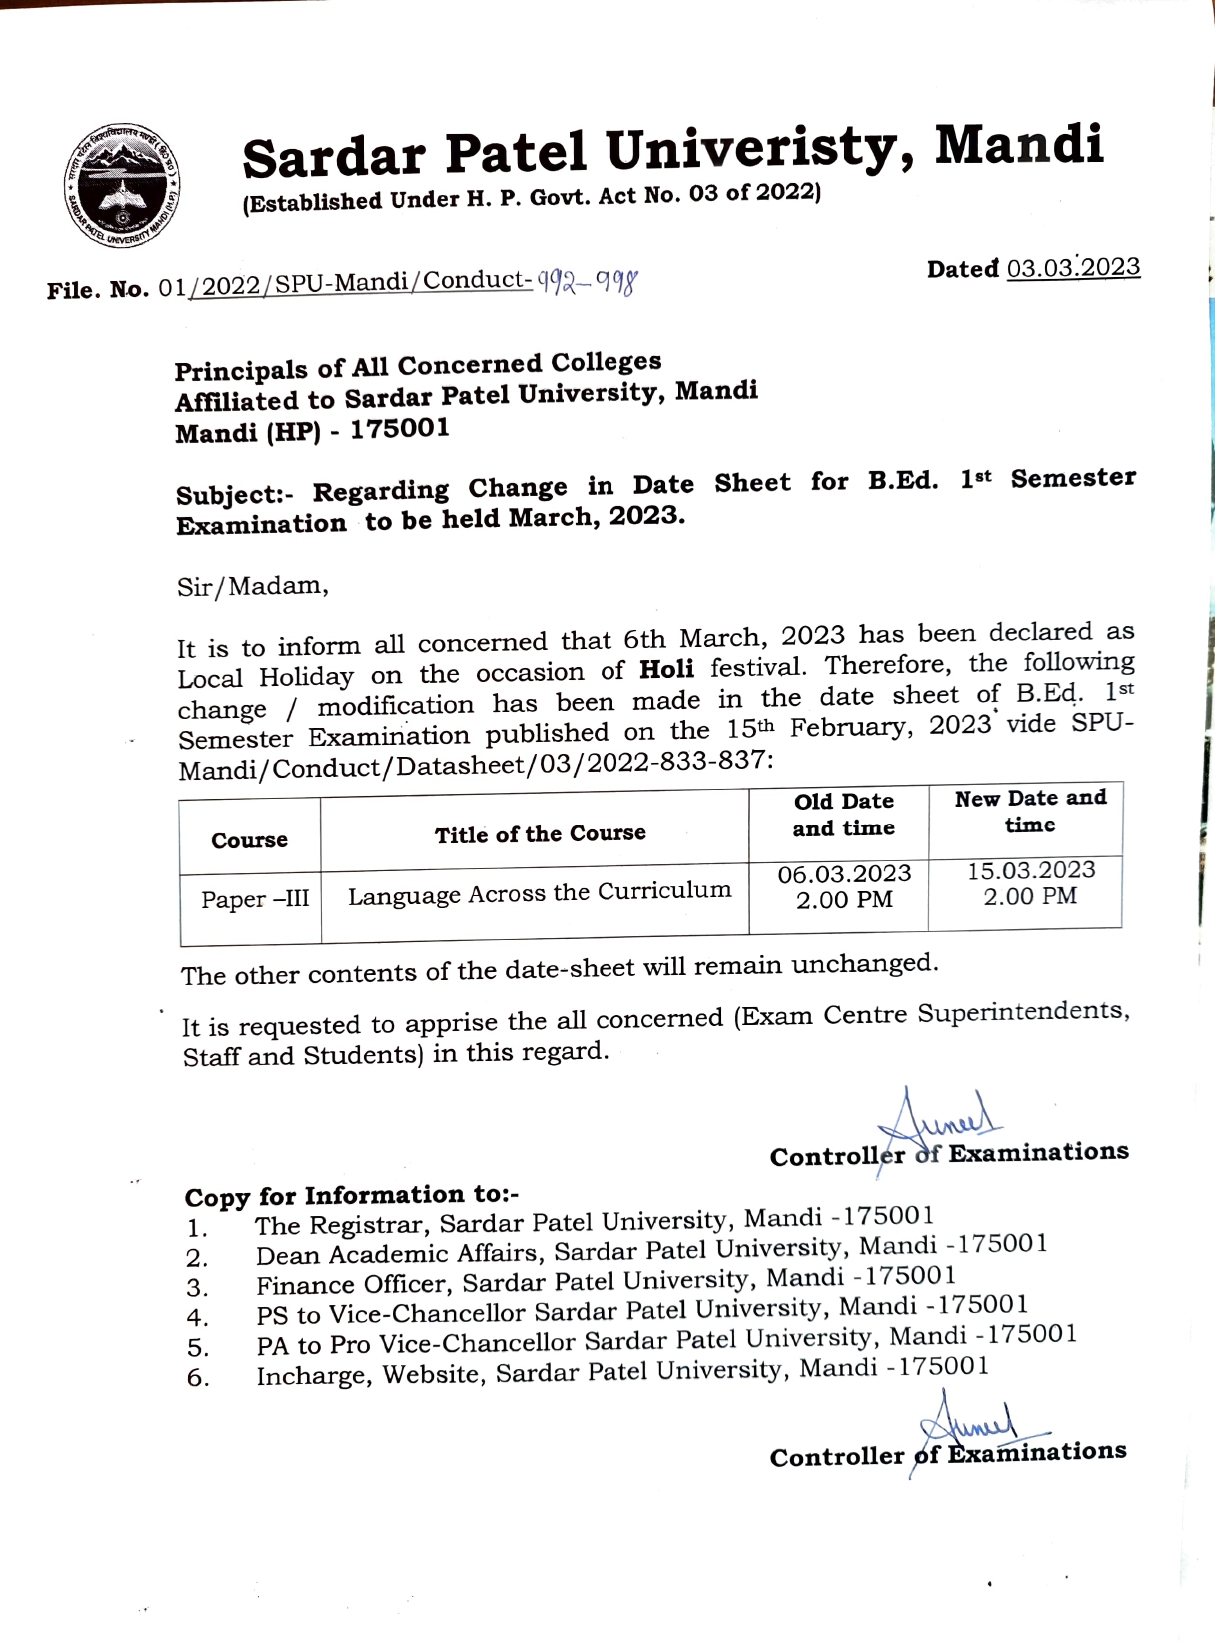 Notification regarding change in the Date sheet of B.Ed. Examination-SPU Mandi